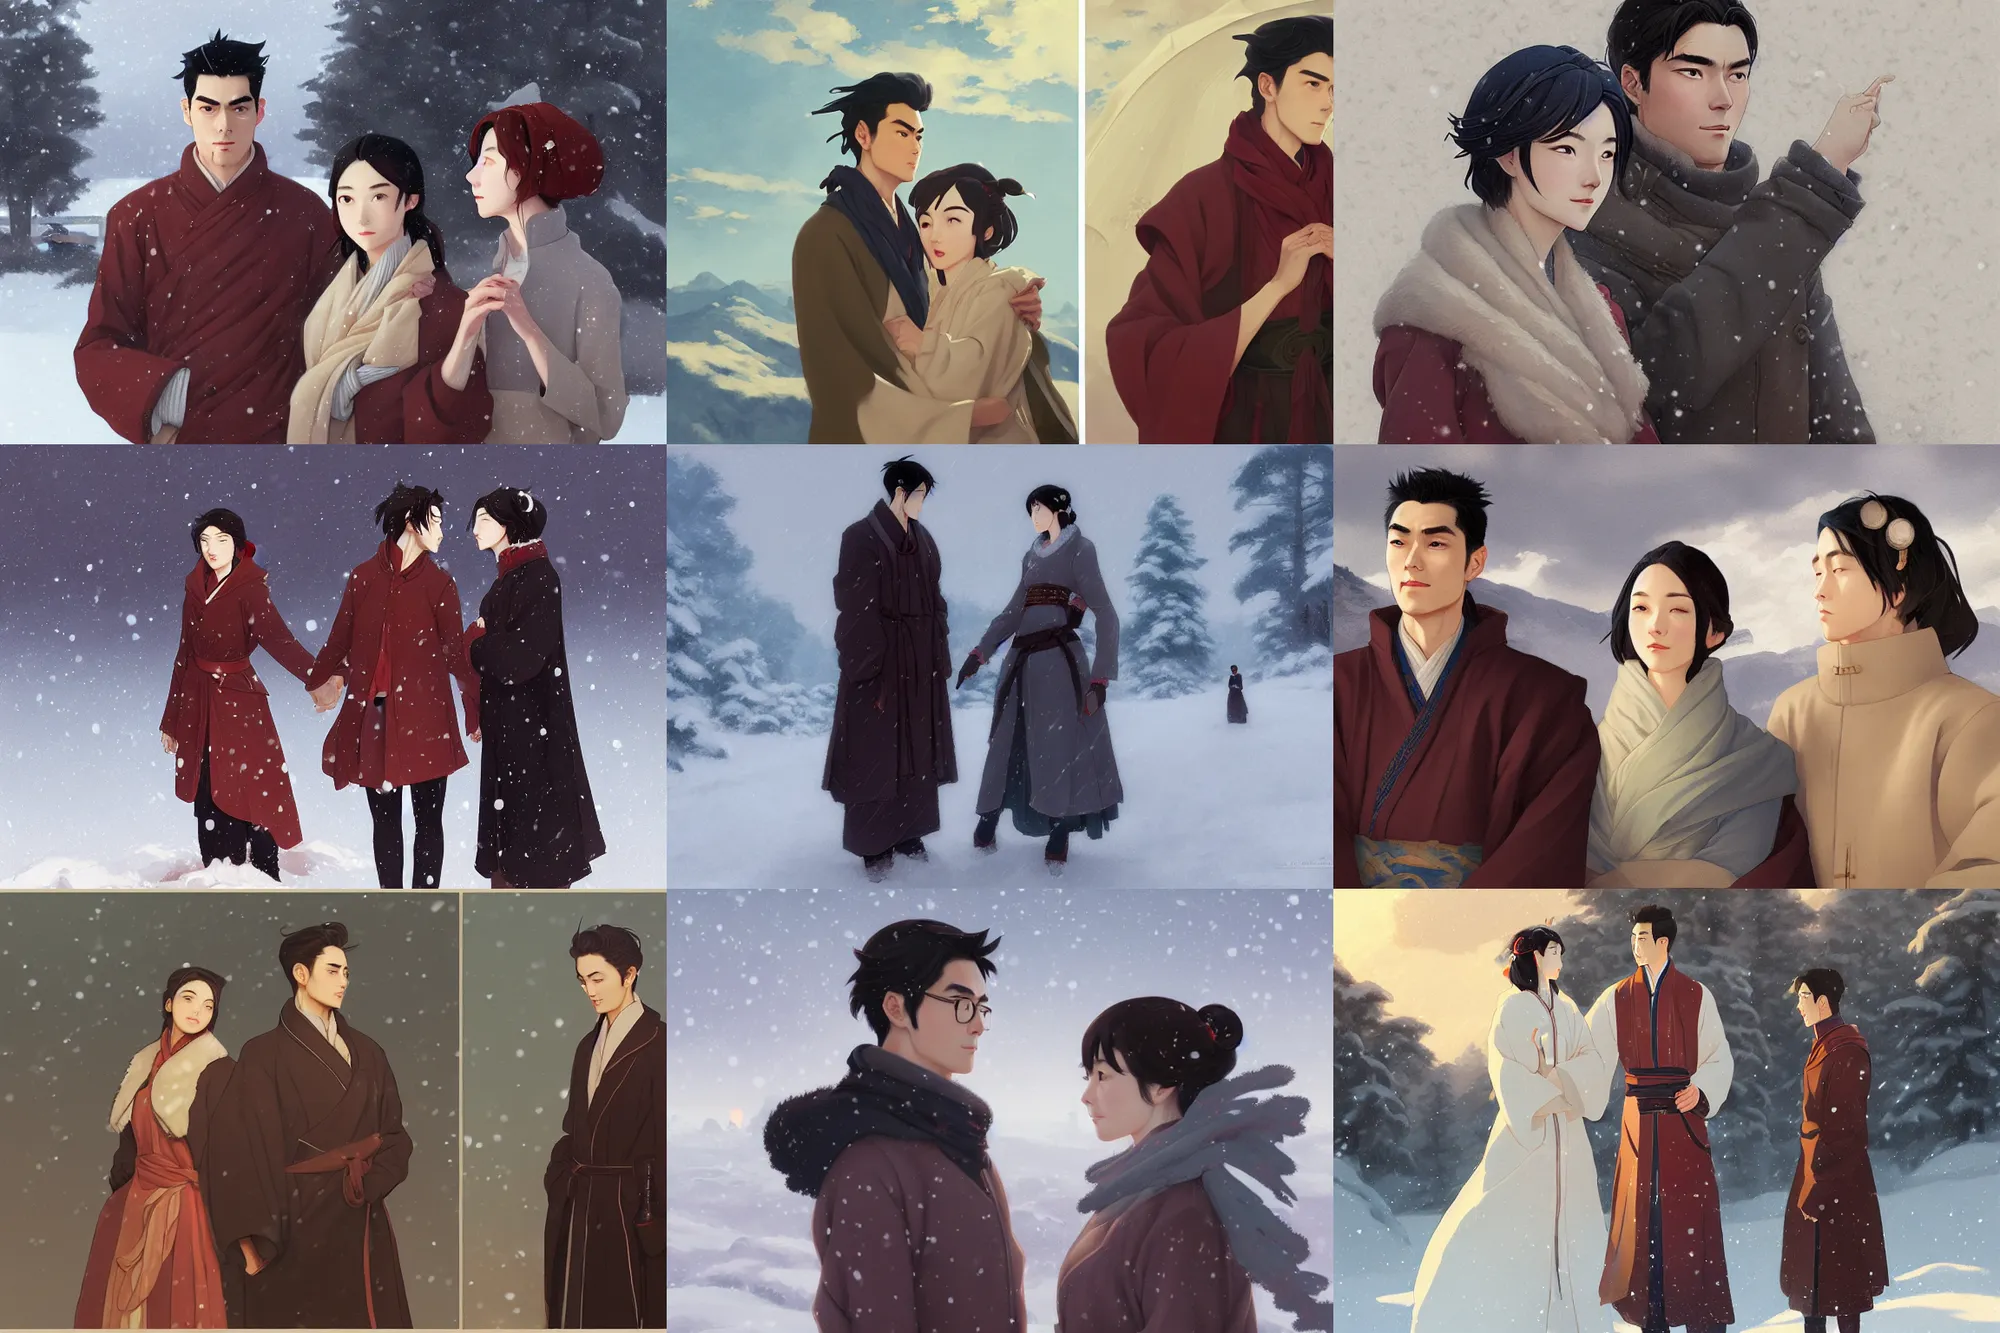 Prompt: man and woman couple, xianxia, winter, portrait, in the style of makoto shinkai, j. c. leyendecker and greg rutkowski